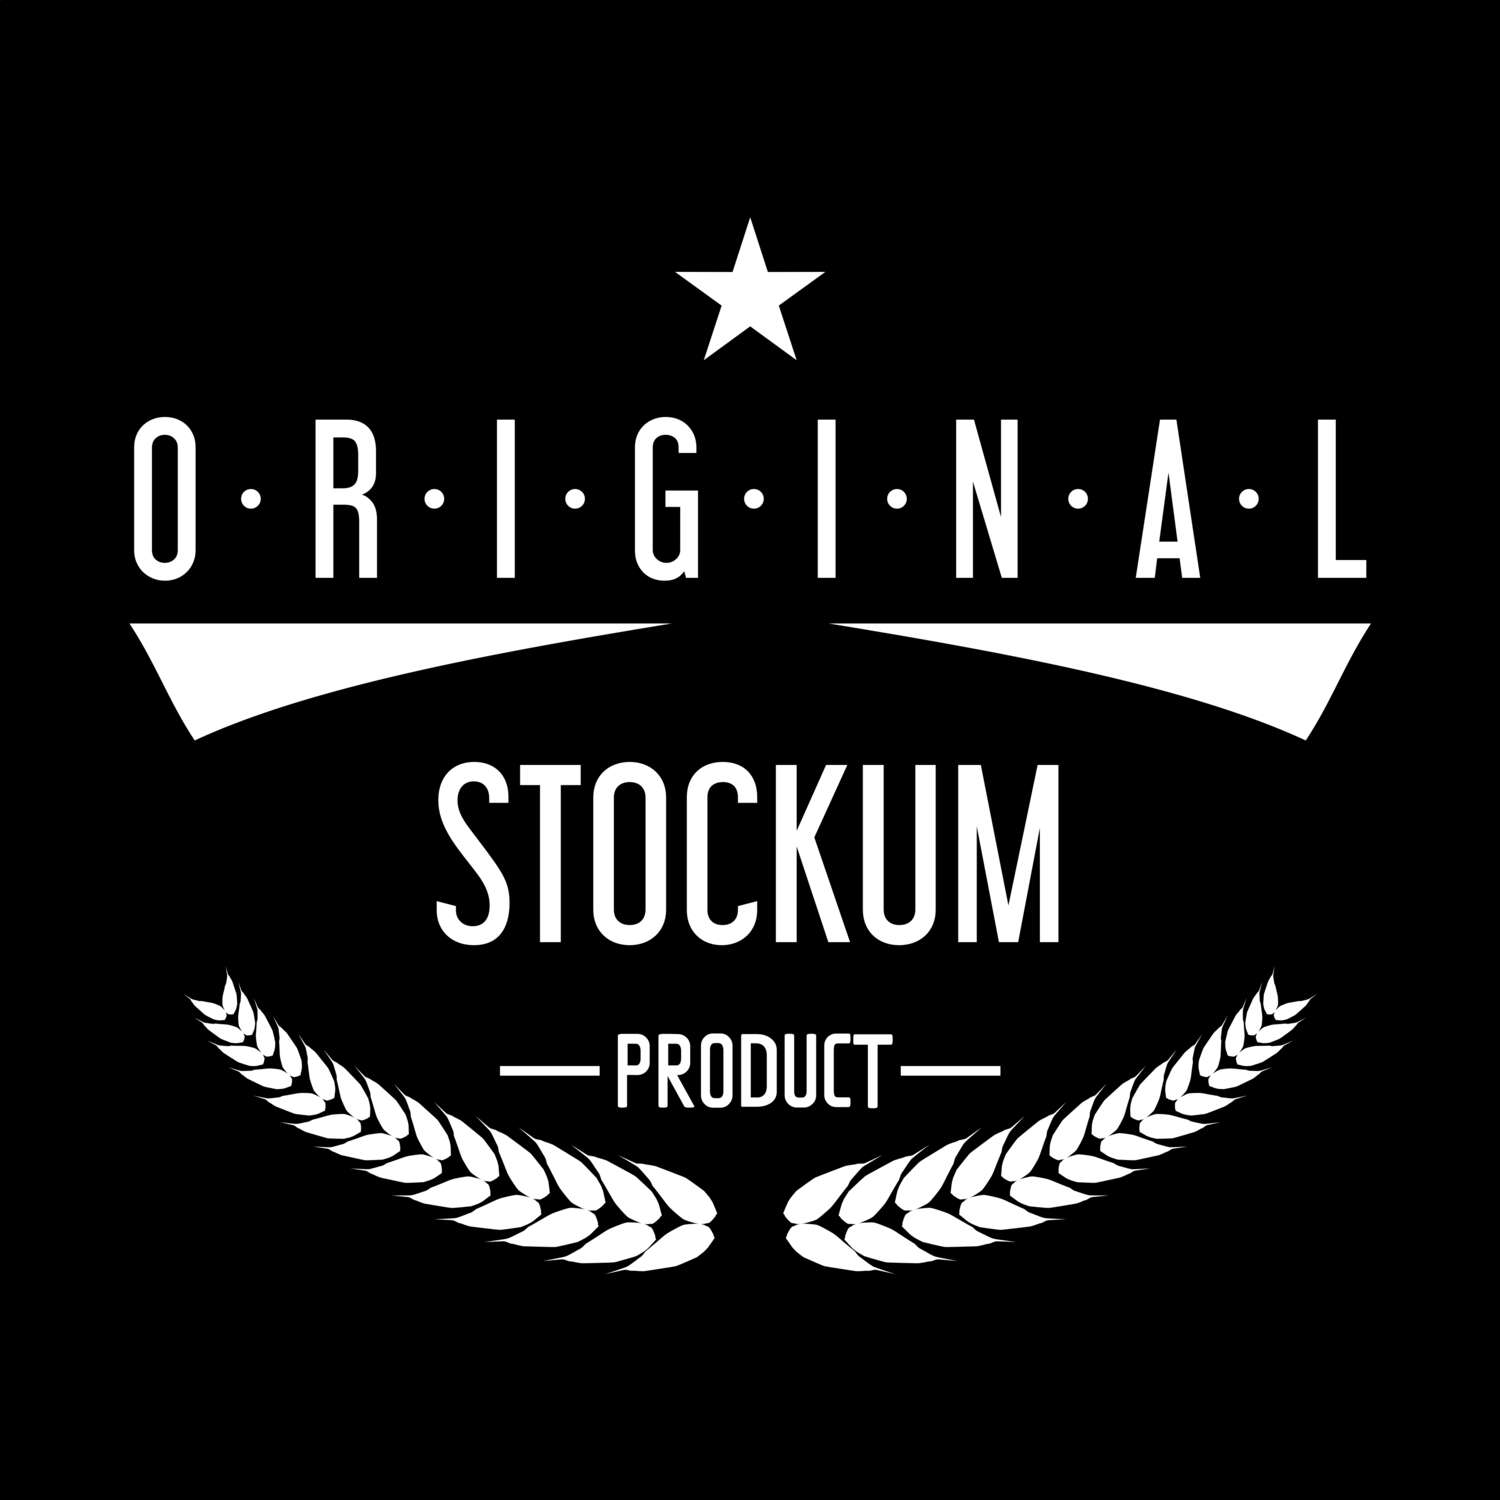 Stockum T-Shirt »Original Product«